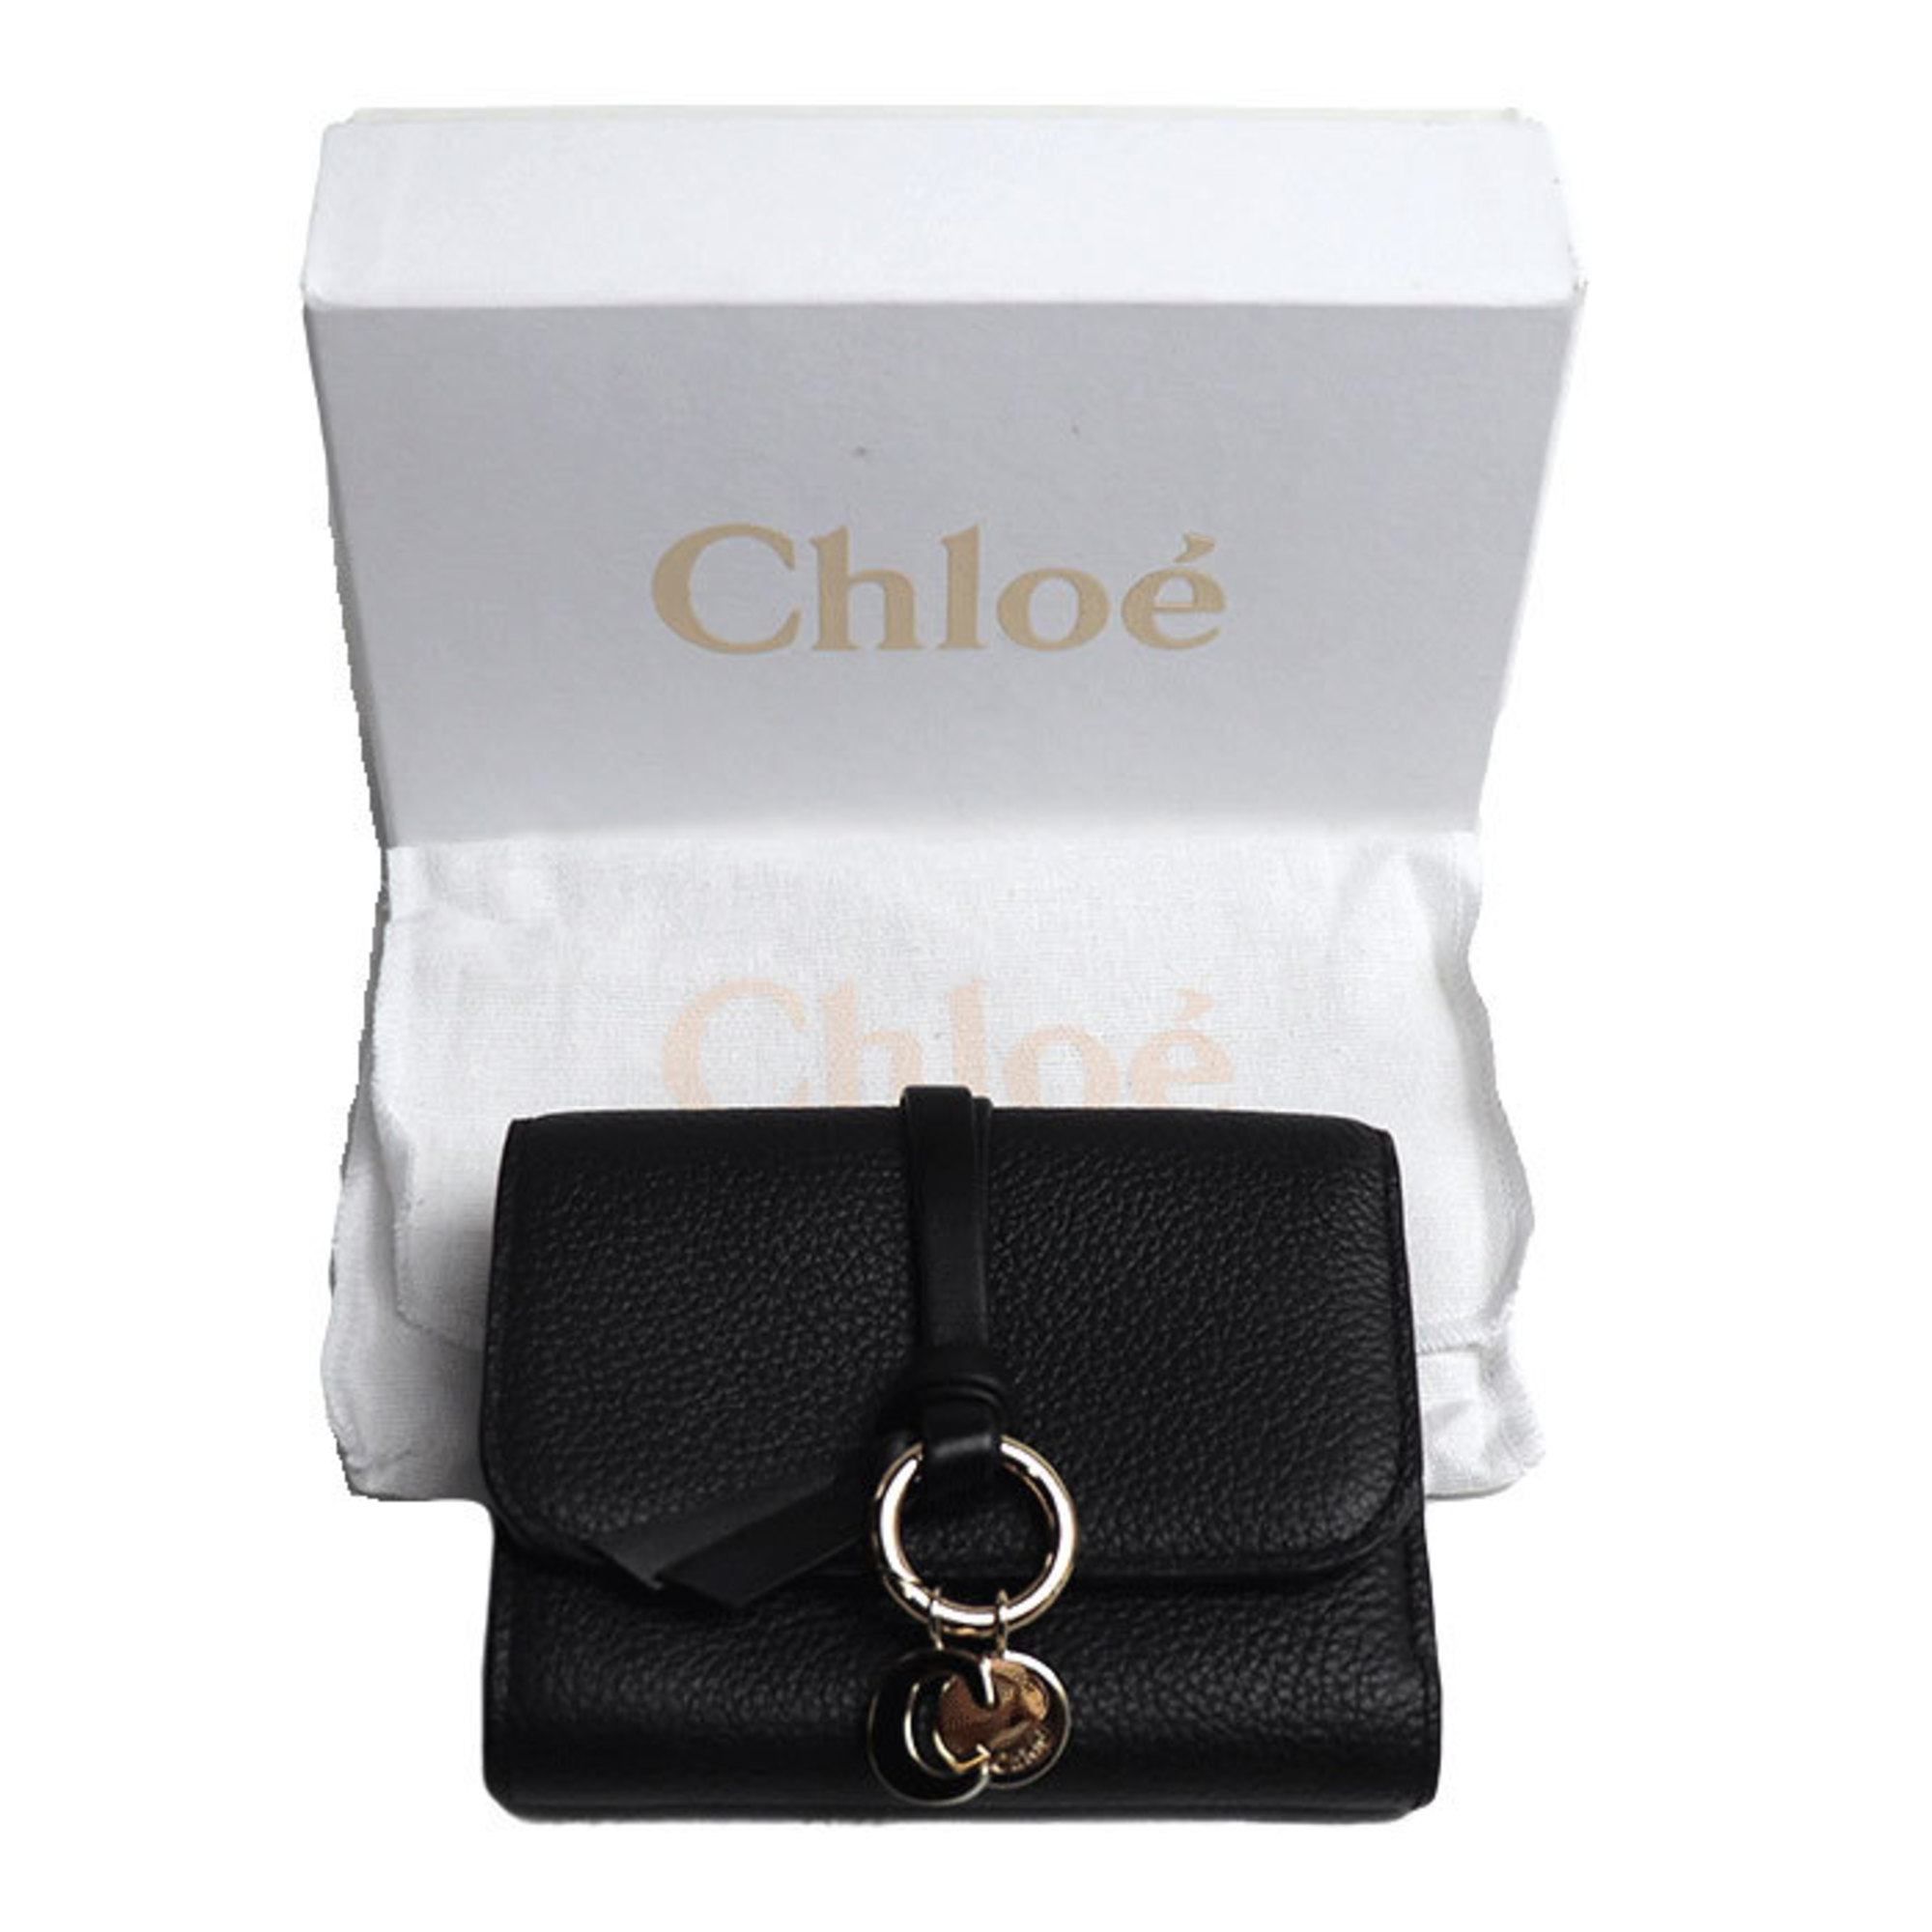 Chloé Chloe Alphabet Small Trifold Wallet Black CHC21WP945F57 001 Women's